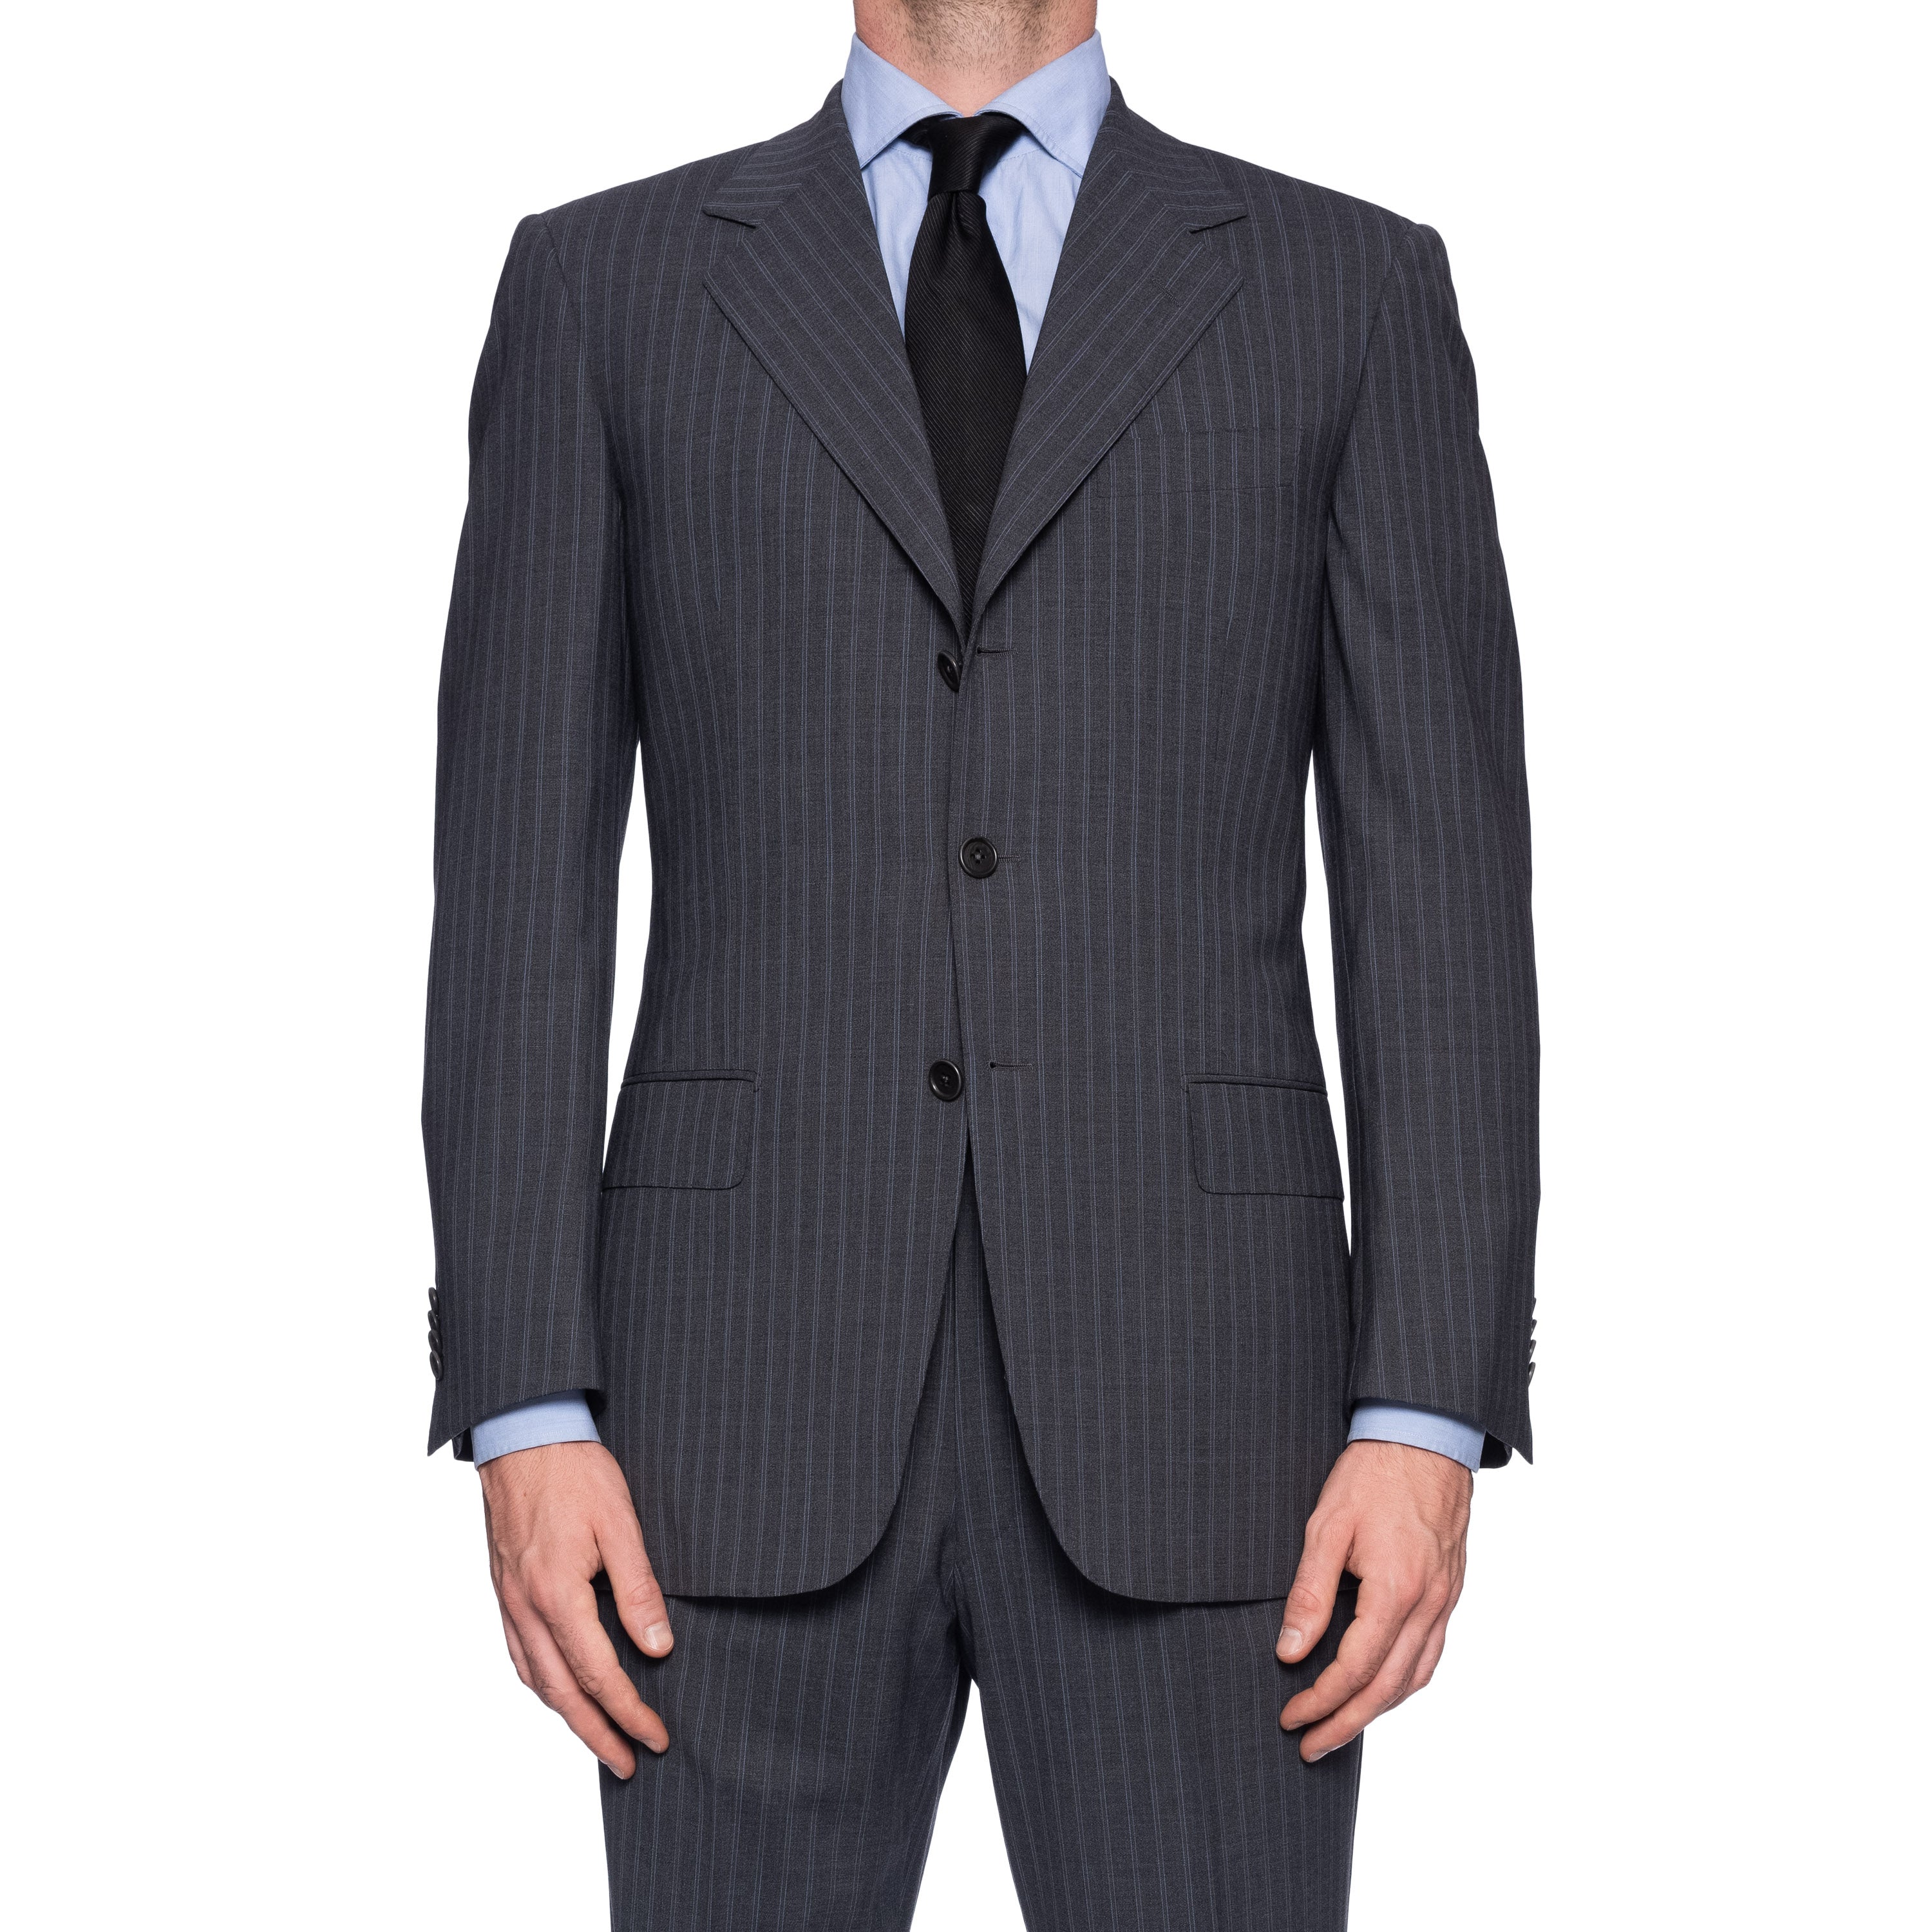 SARTORIA CASTANGIA Gray Striped Wool Super 110's Business Suit EU 48 NEW US 38 CASTANGIA